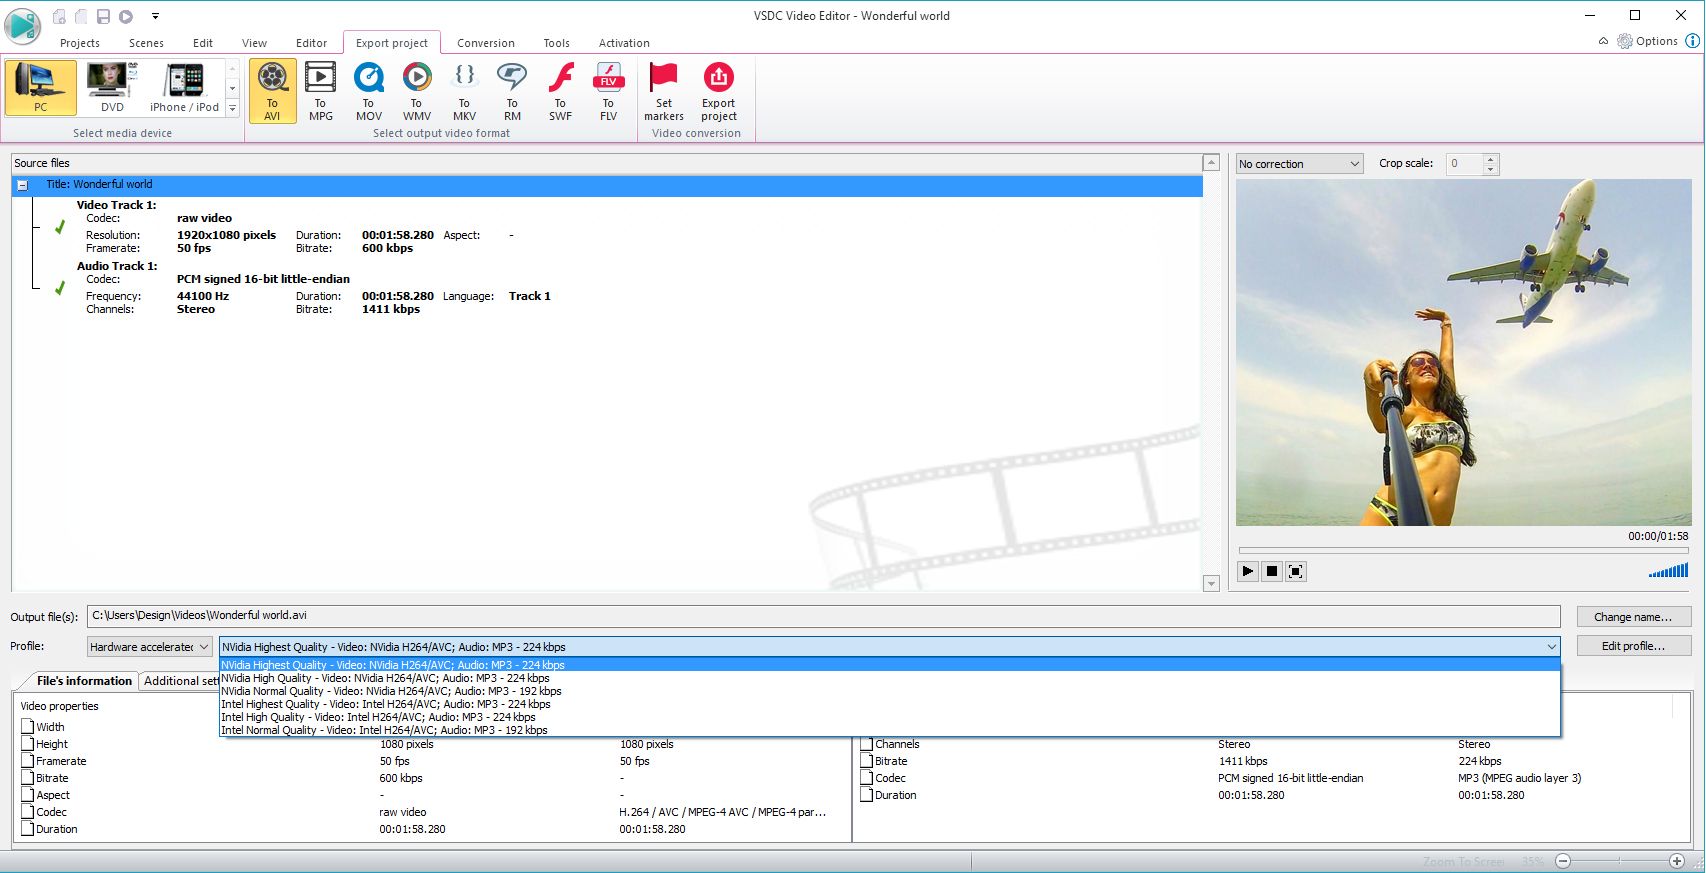 vsdc free video editor download 32 bit